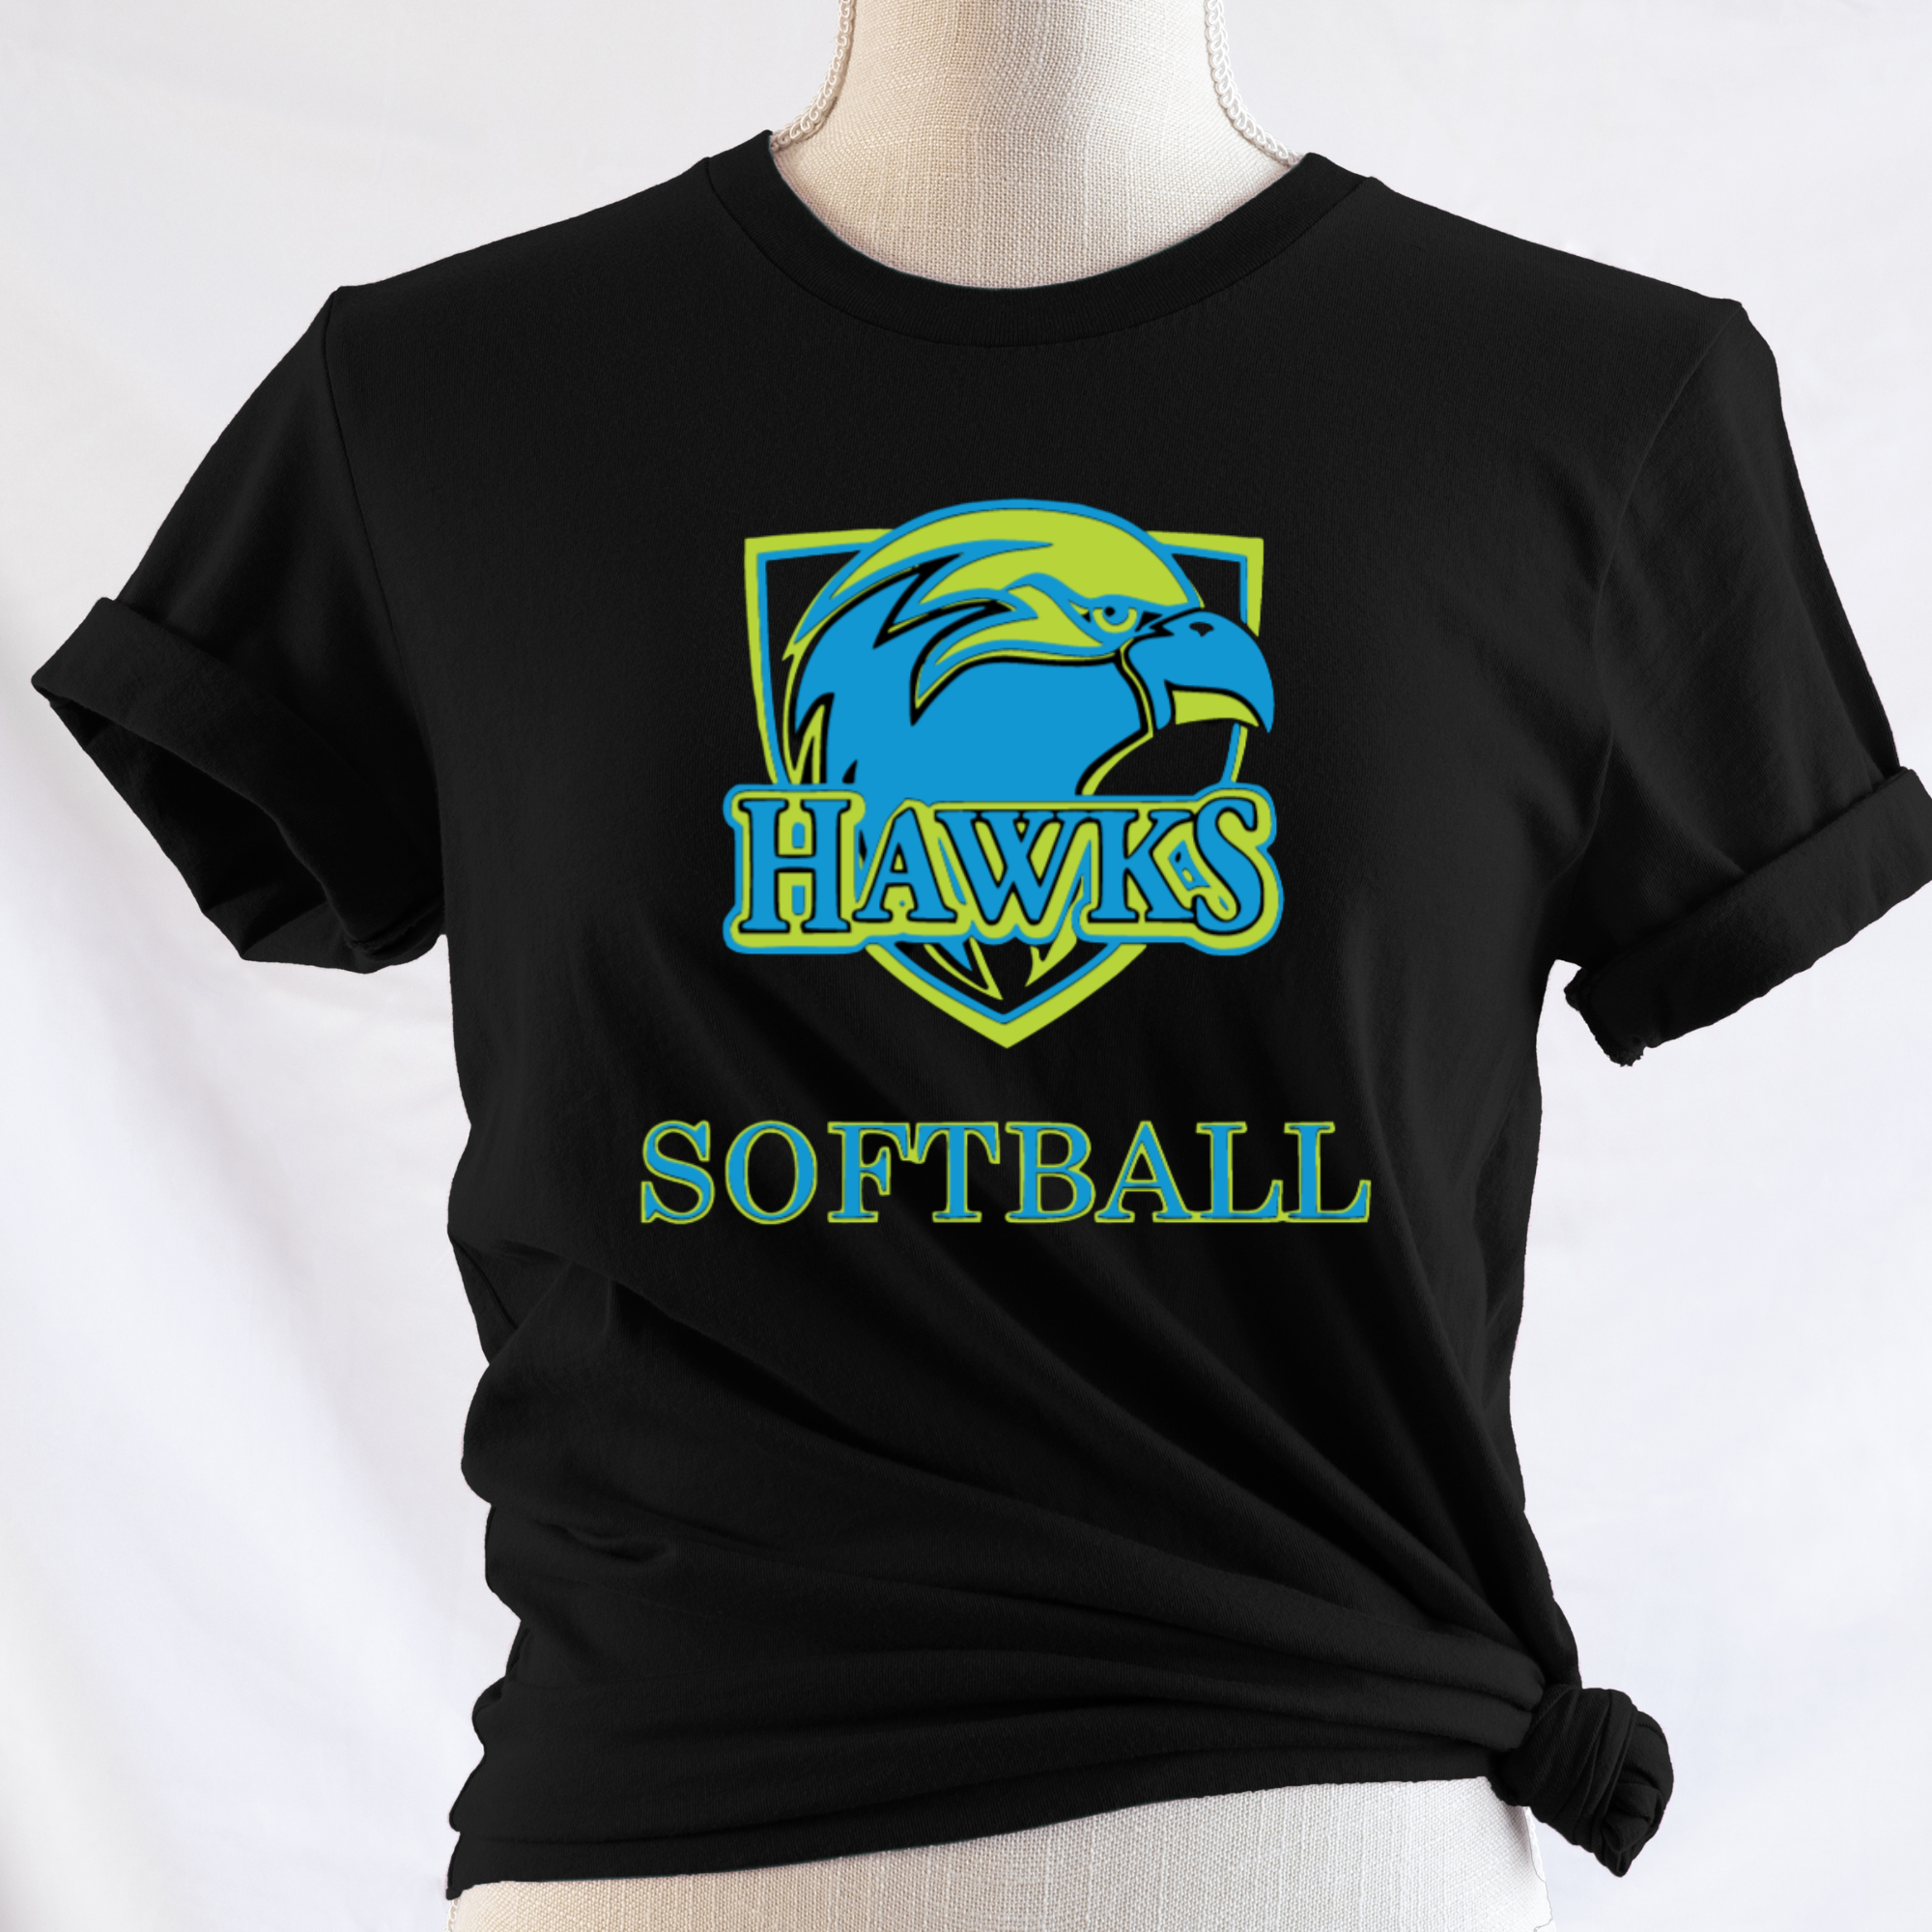 Hawks Softball Shirt